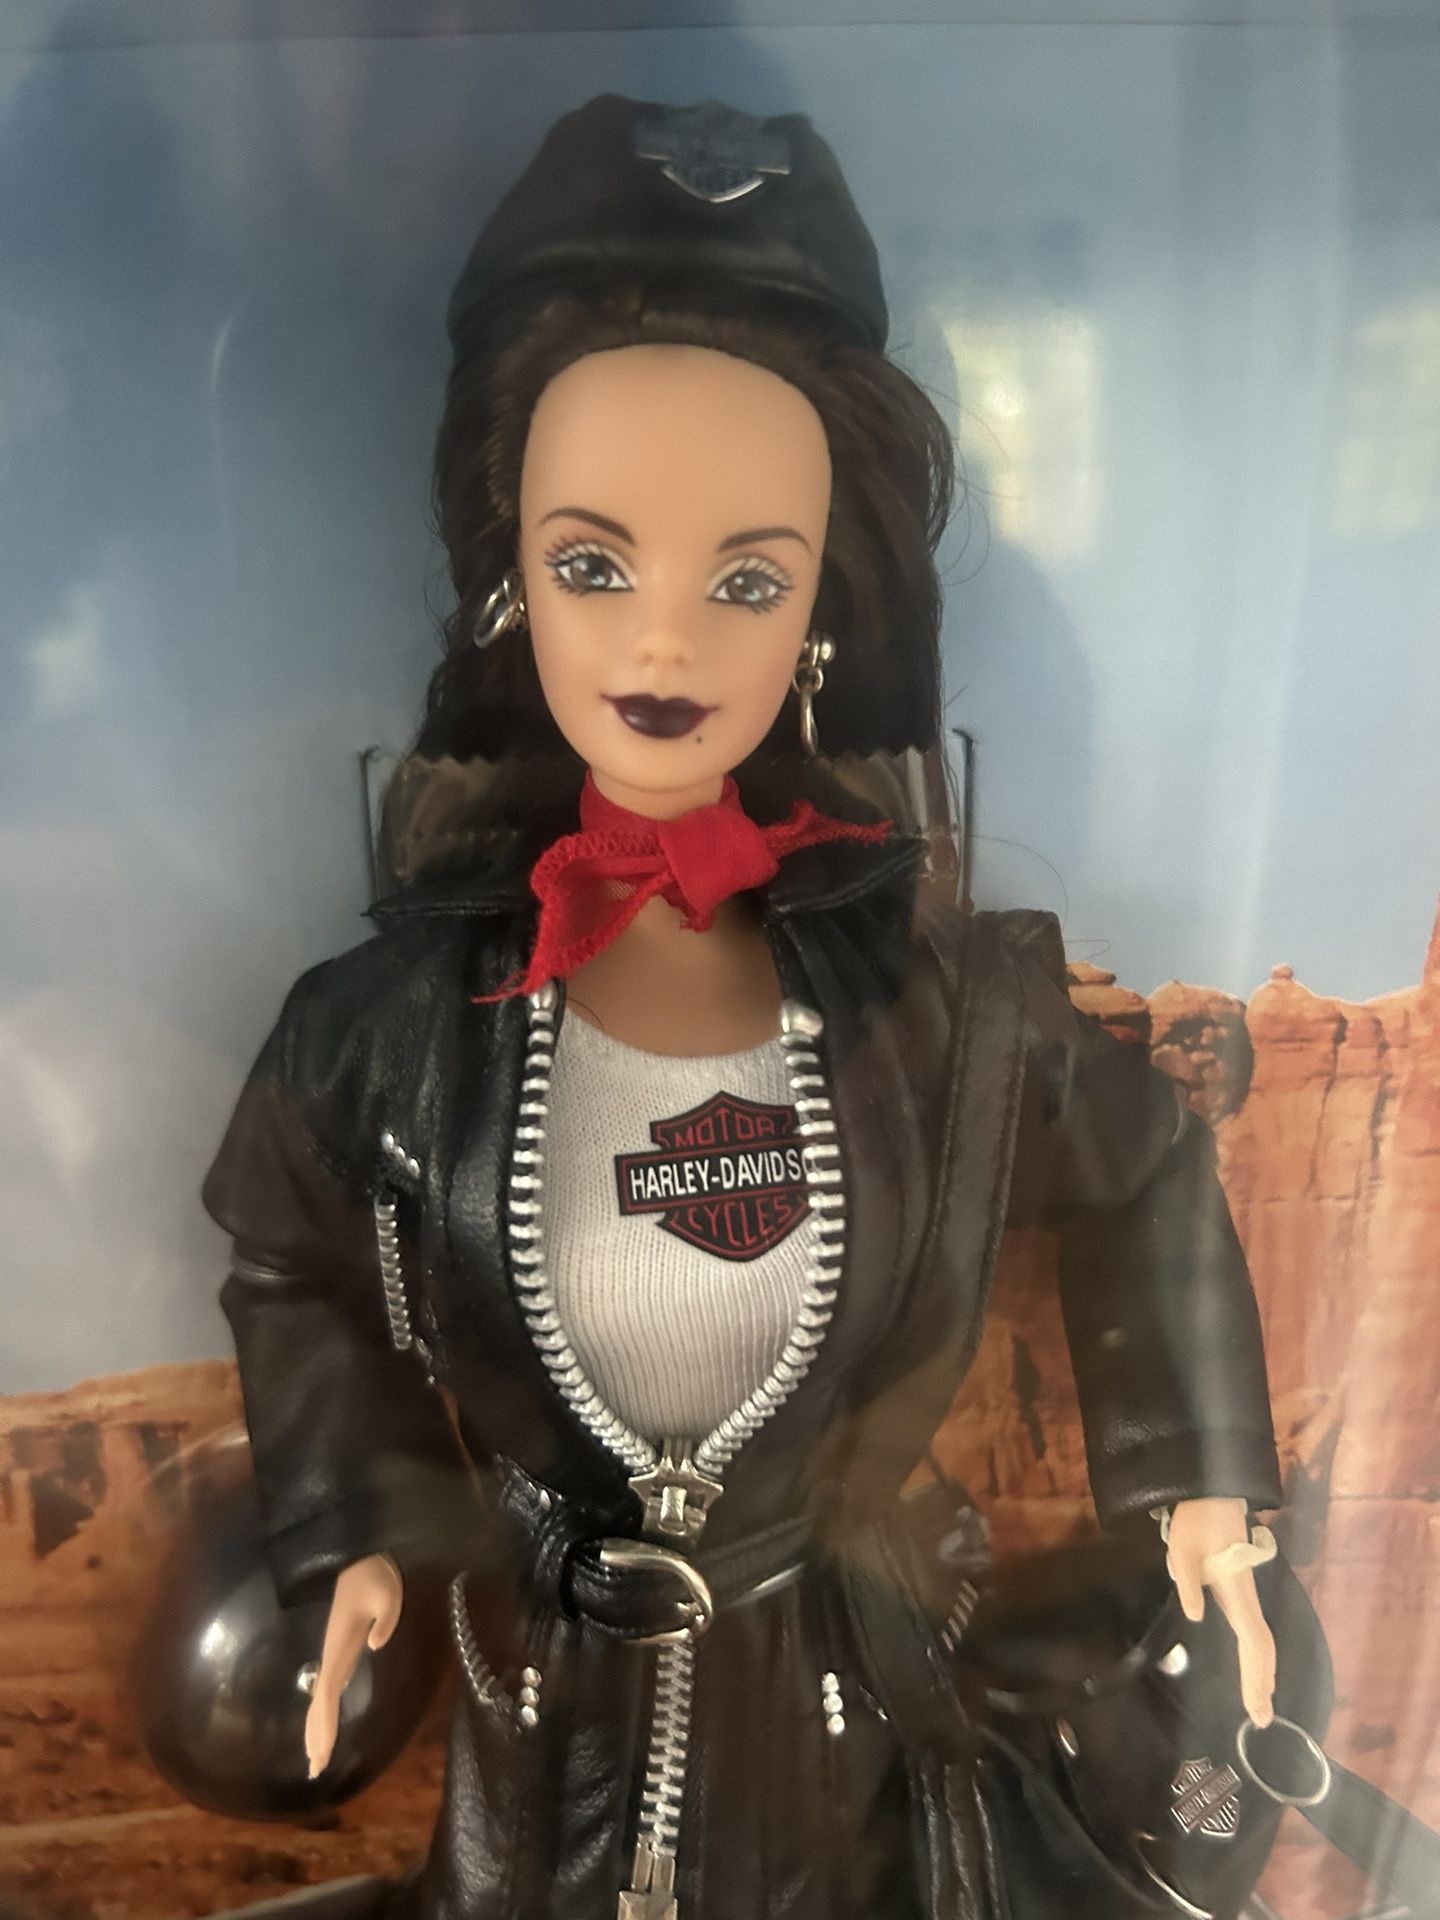 Harley Davidson Barbie Collector Edition #3 Mattel 22256 Raven Hair